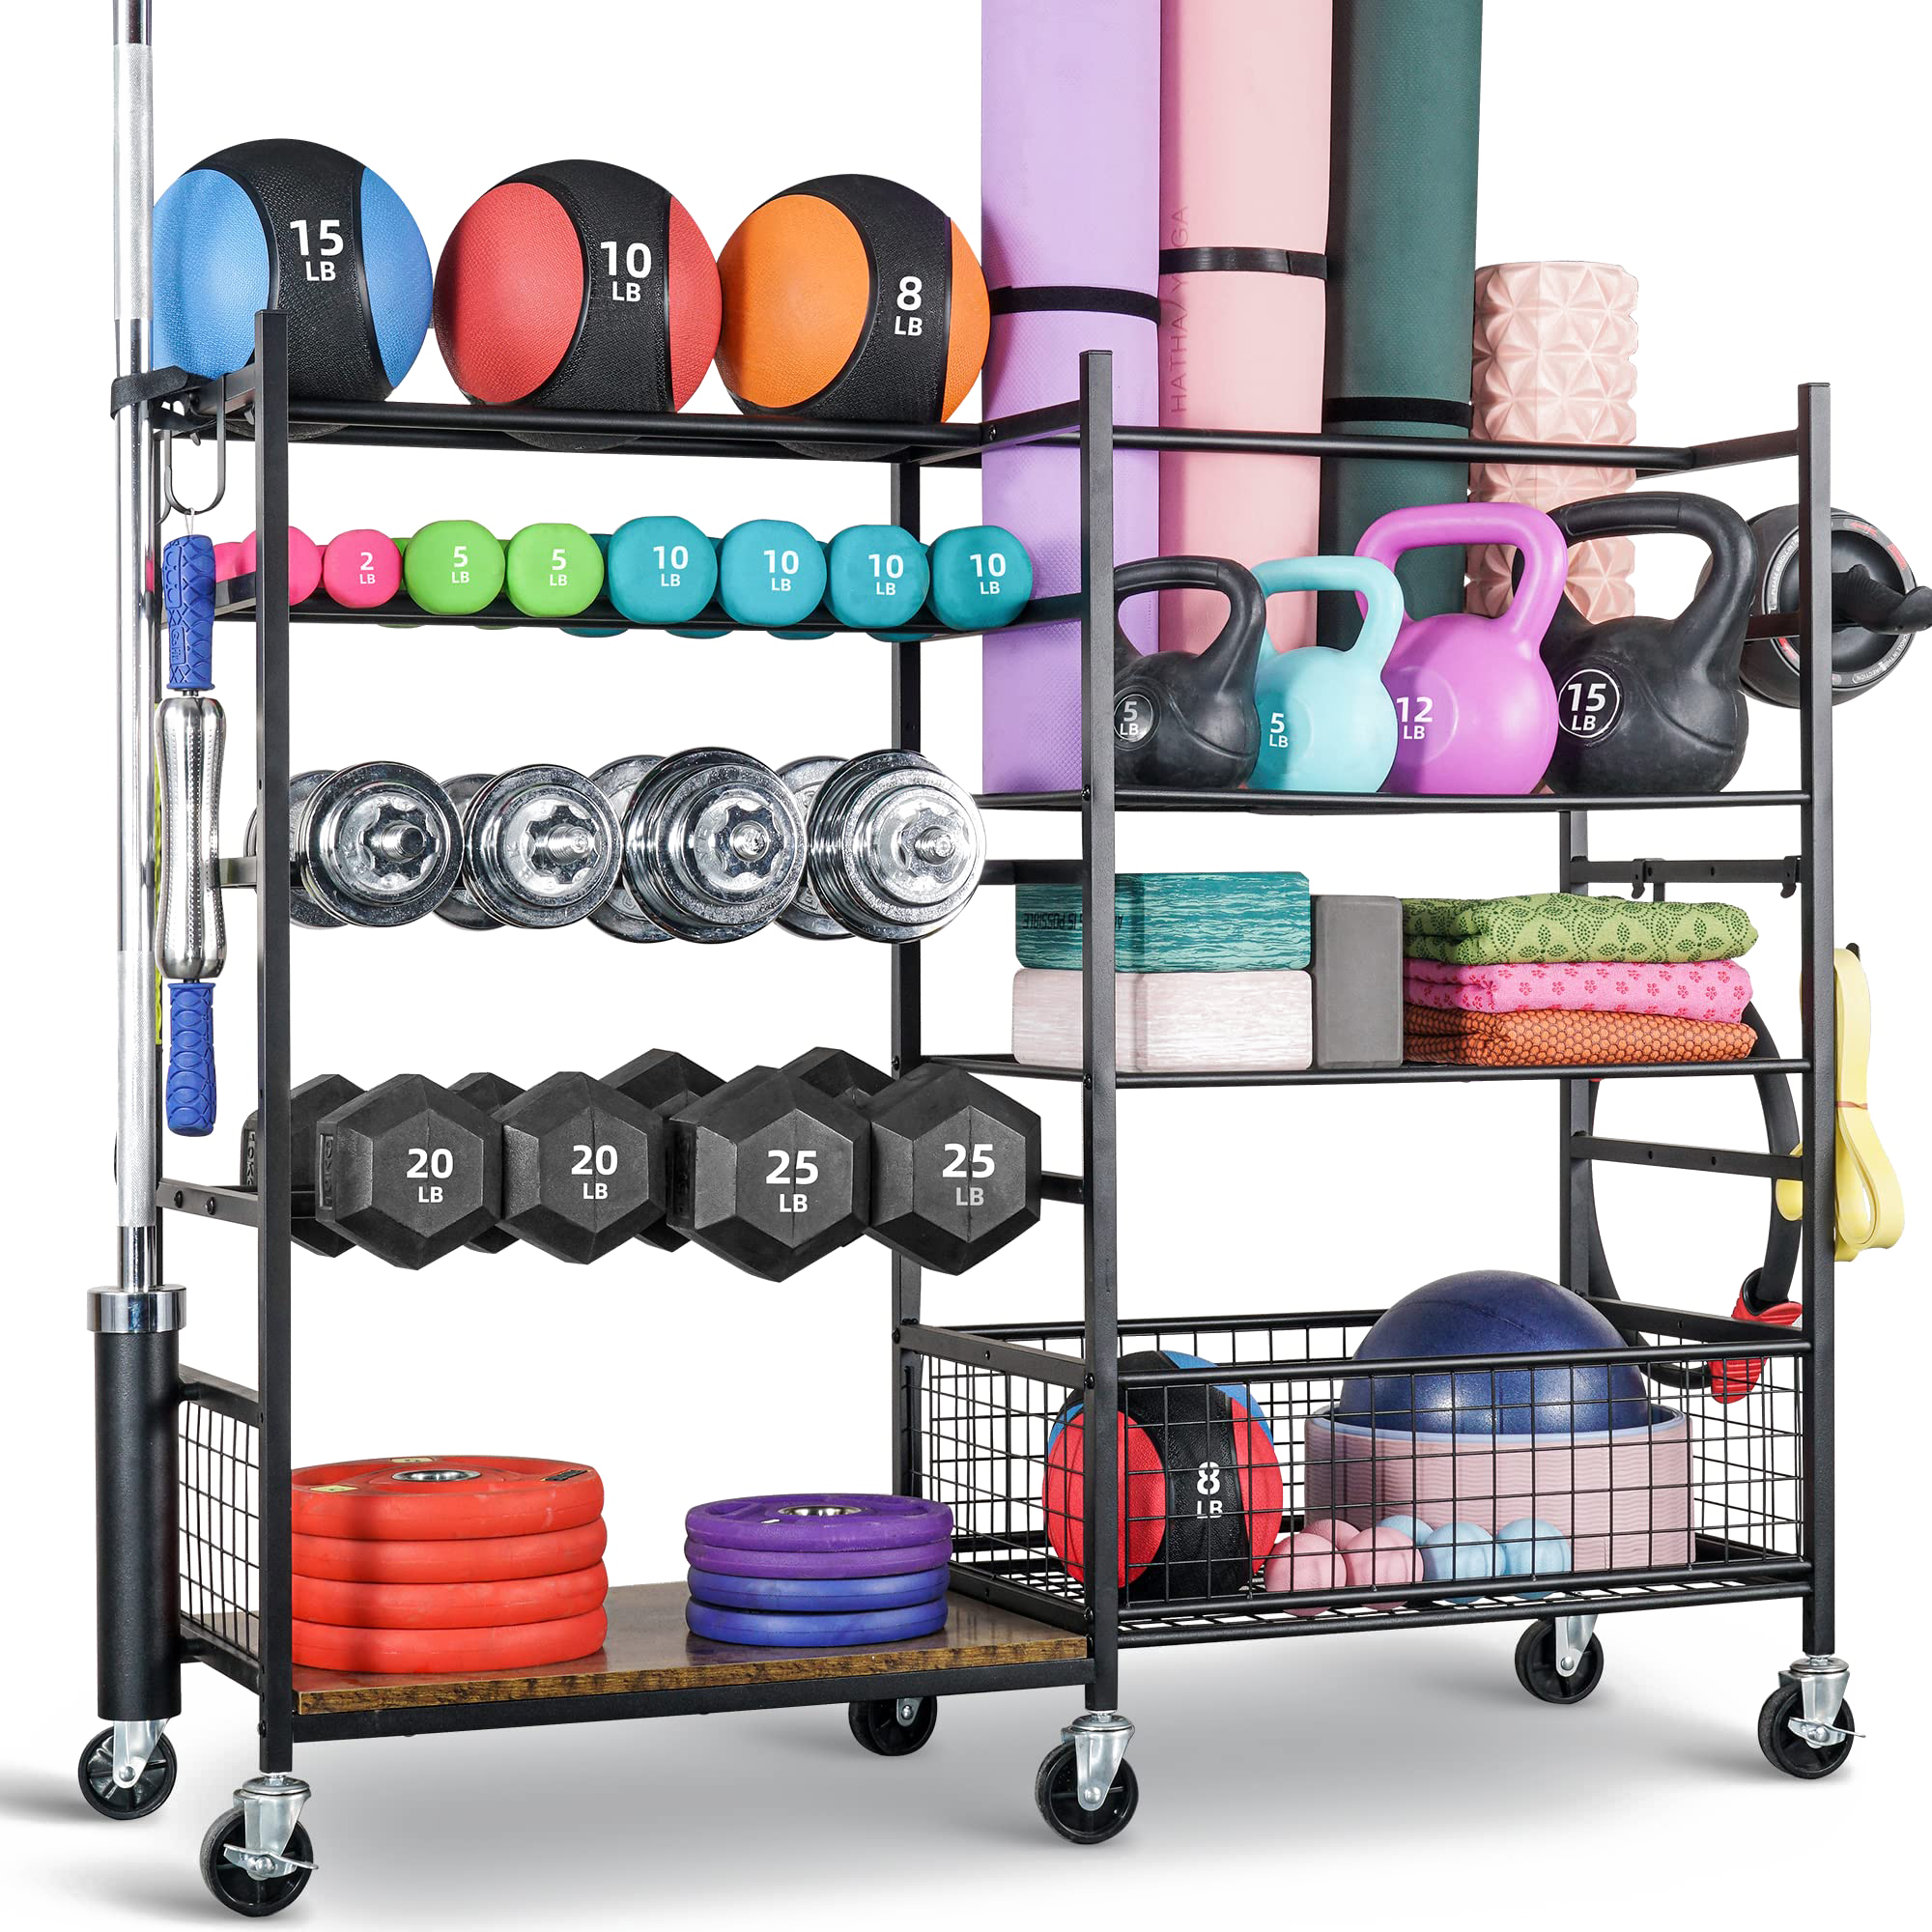 Mythinglogic Home Gym Equipment Storage Organizer Yoga Mat Holder for Yoga  Mat Foam Roller Dumbbells Kettlebells and More Gym Accessories